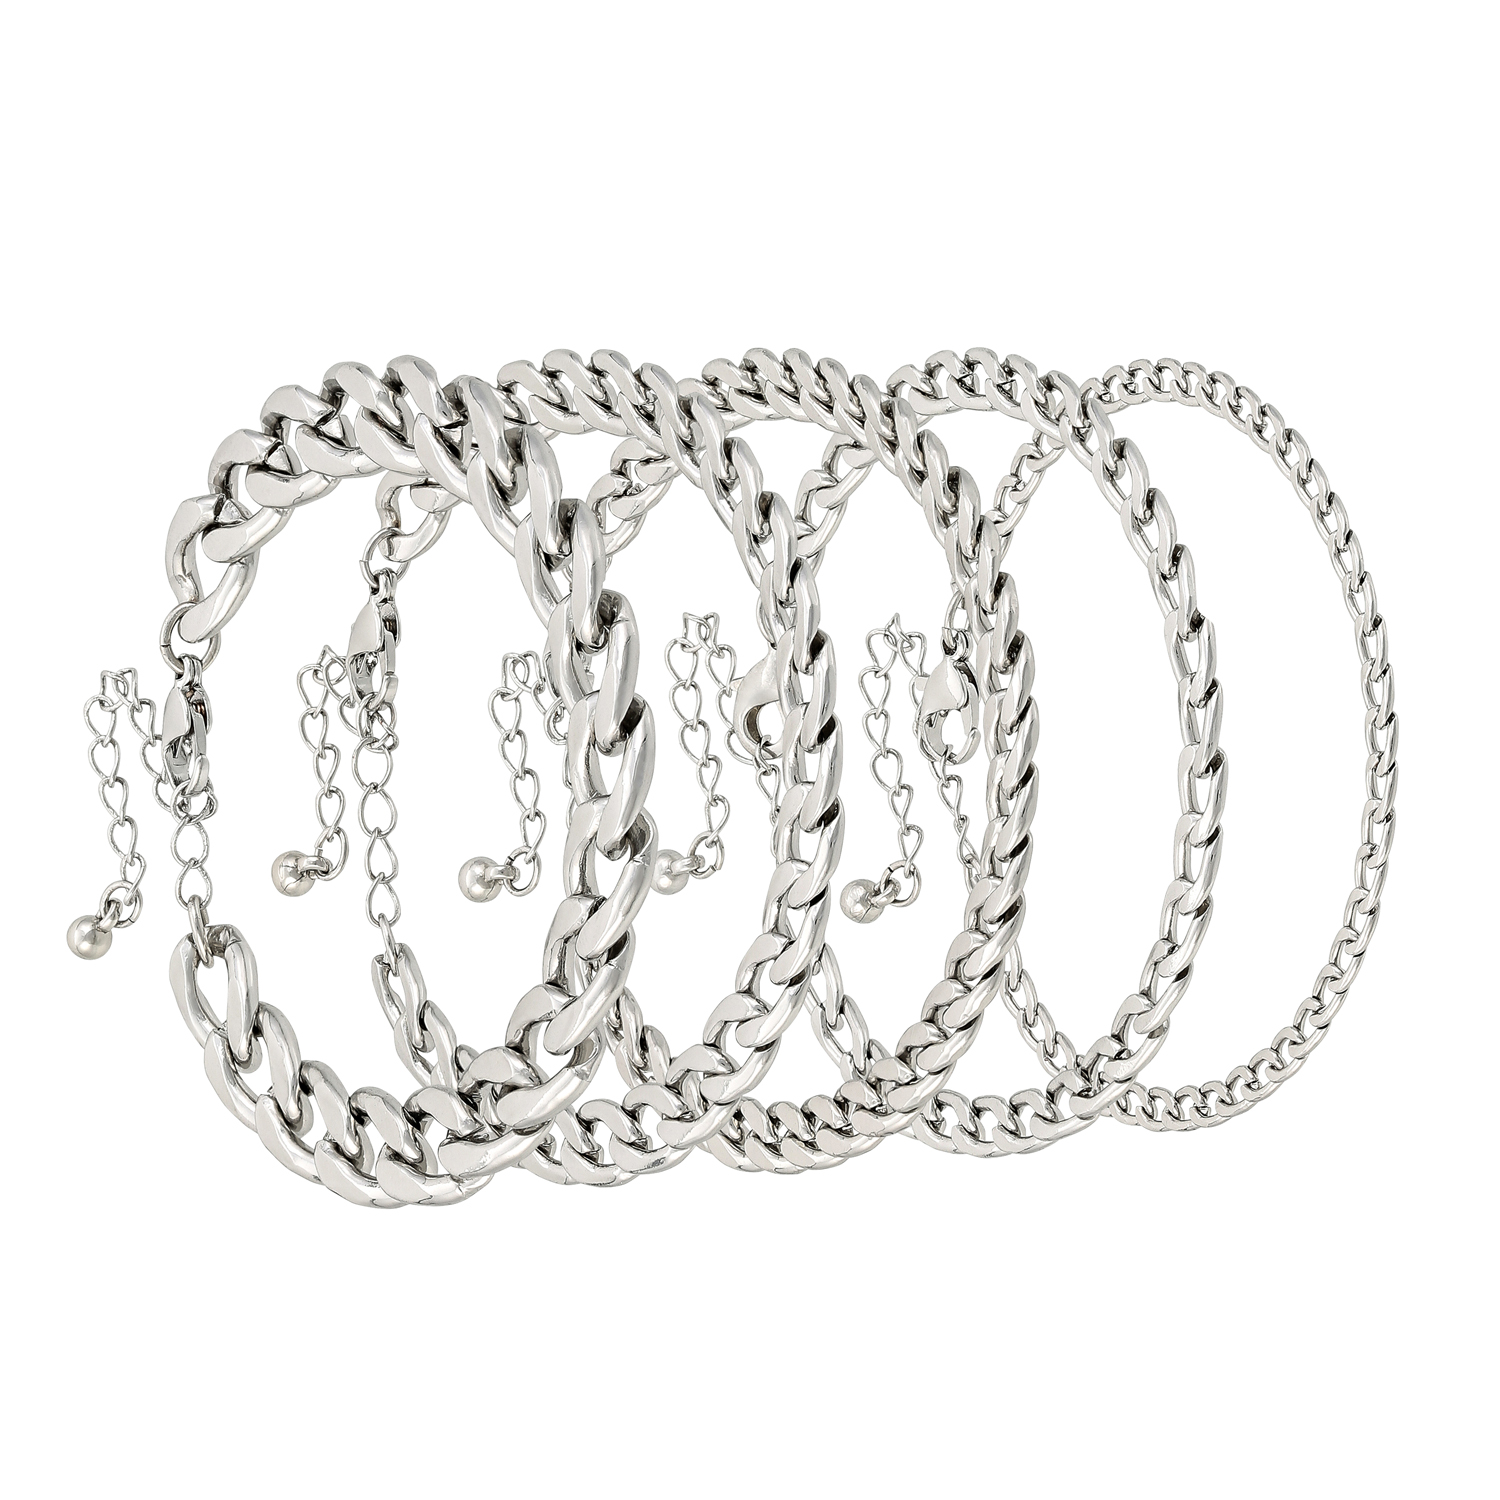 Ensemble de bracelets - Many Chains